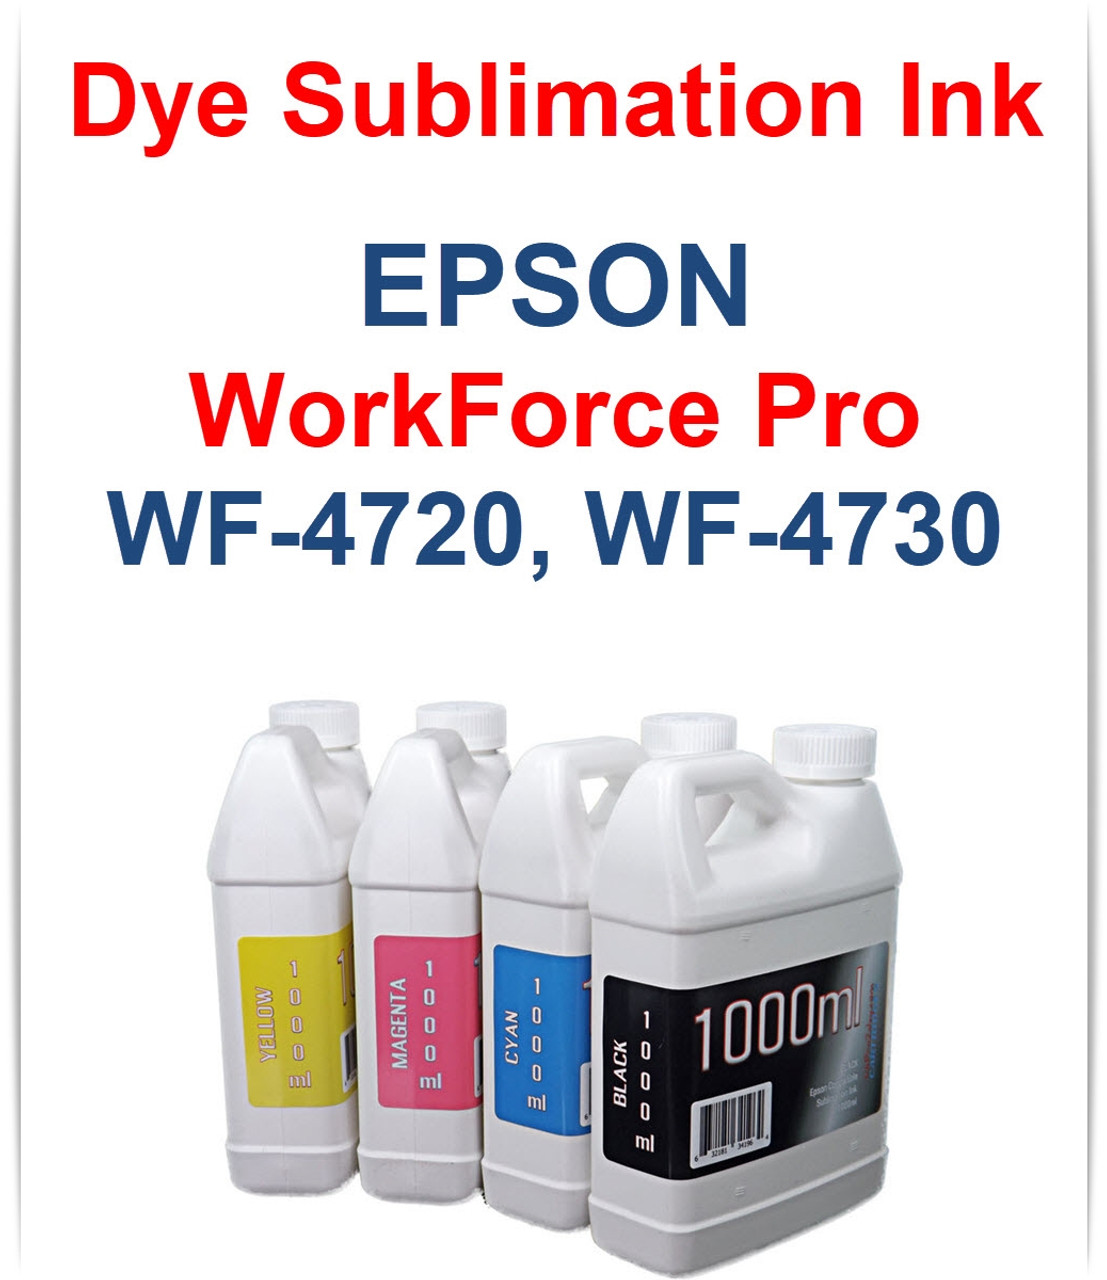 4- 1000ml bottles Dye Sublimation Ink for Epson WorkForce Pro WF-4720 WF-4730 Printers